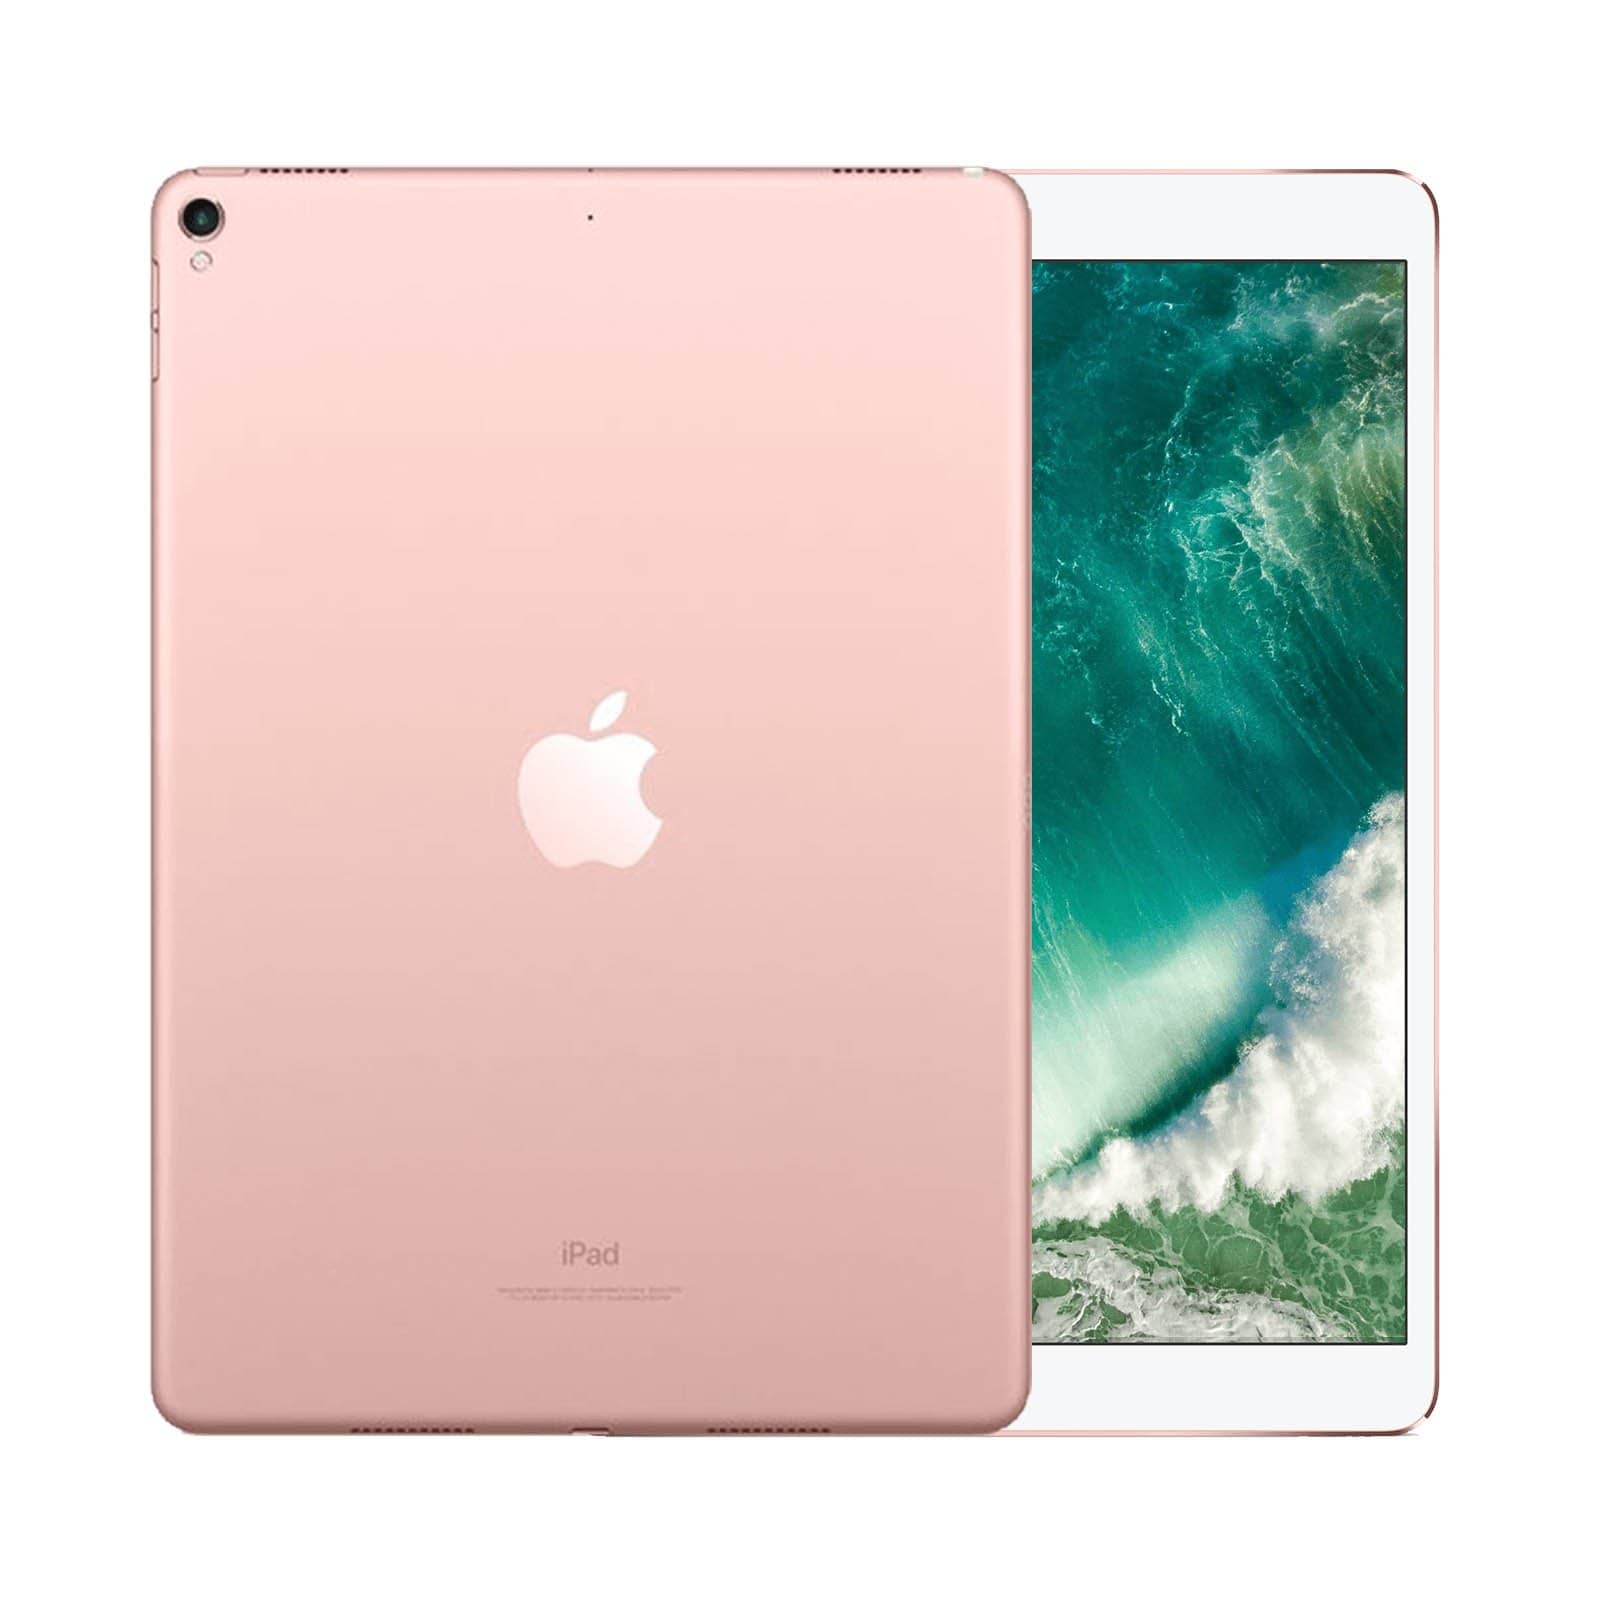 iPad Pro 10.5 Inch 512GB Rose Gold Very Good - WiFi 512GB Rose Gold Very Good